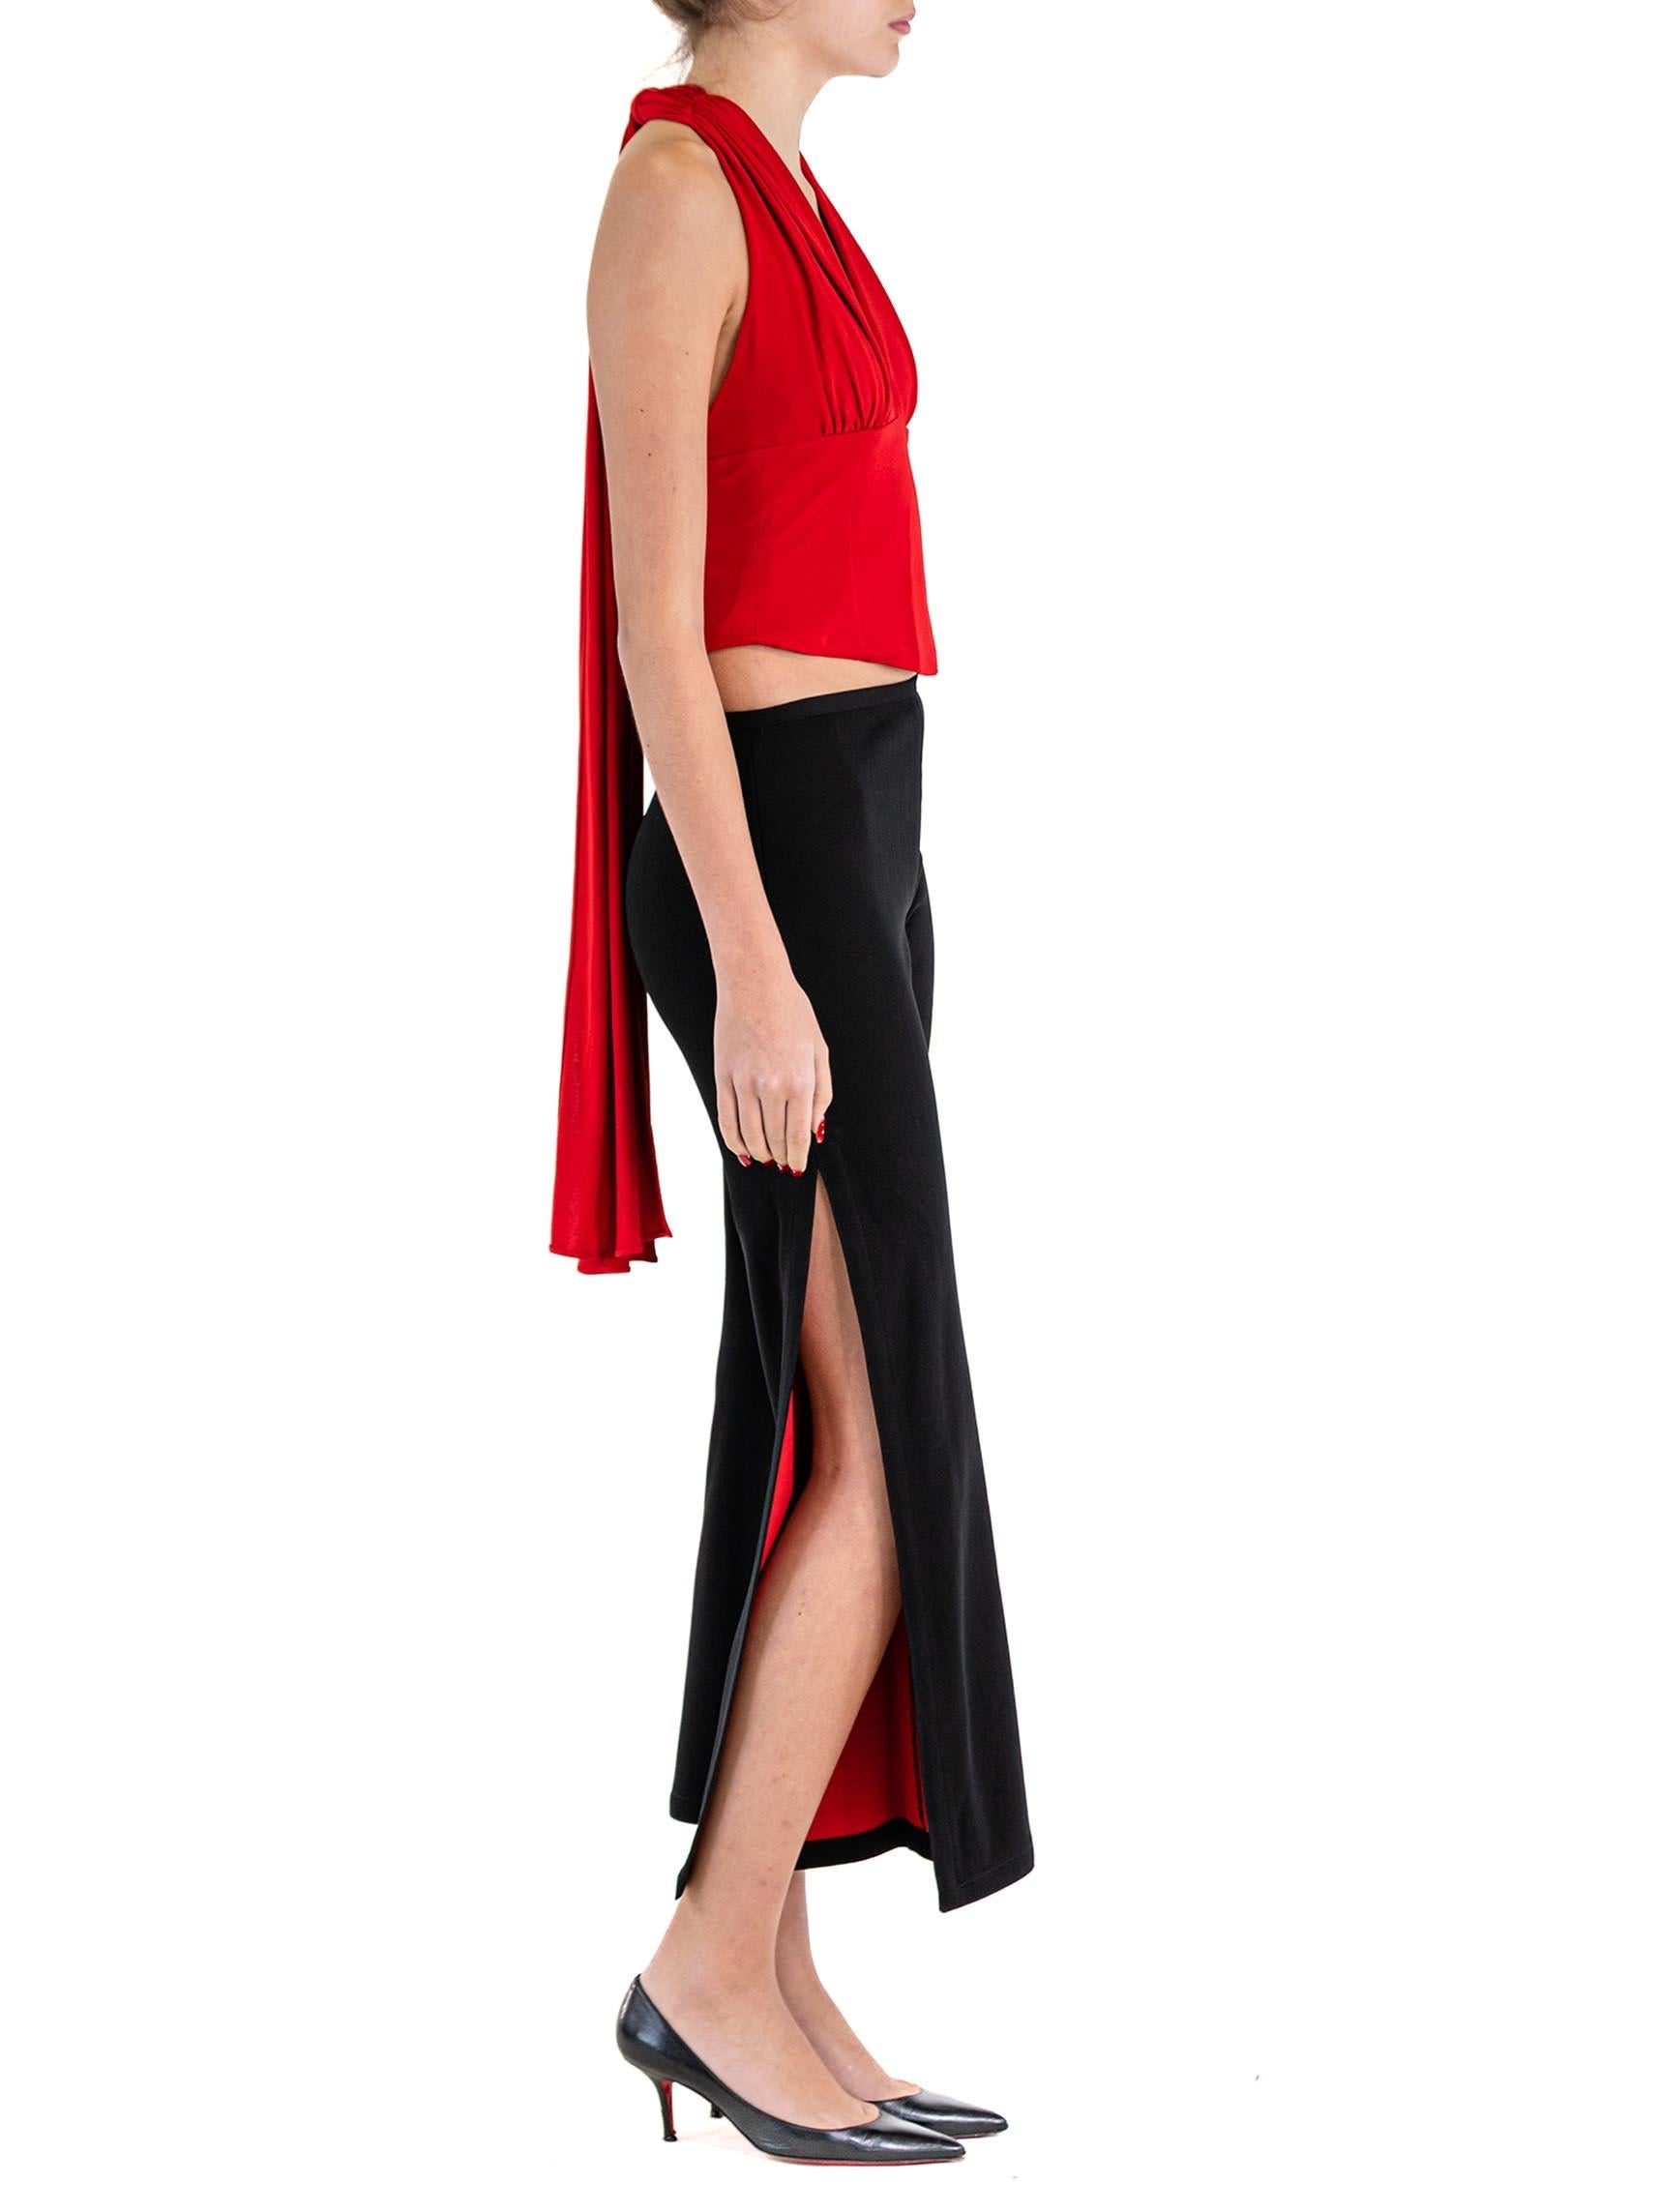 Women's 1990S HERVE LEGER Ruby Red & Black Rayon Lycra Jersey Deep V Top Pants Ensemble For Sale